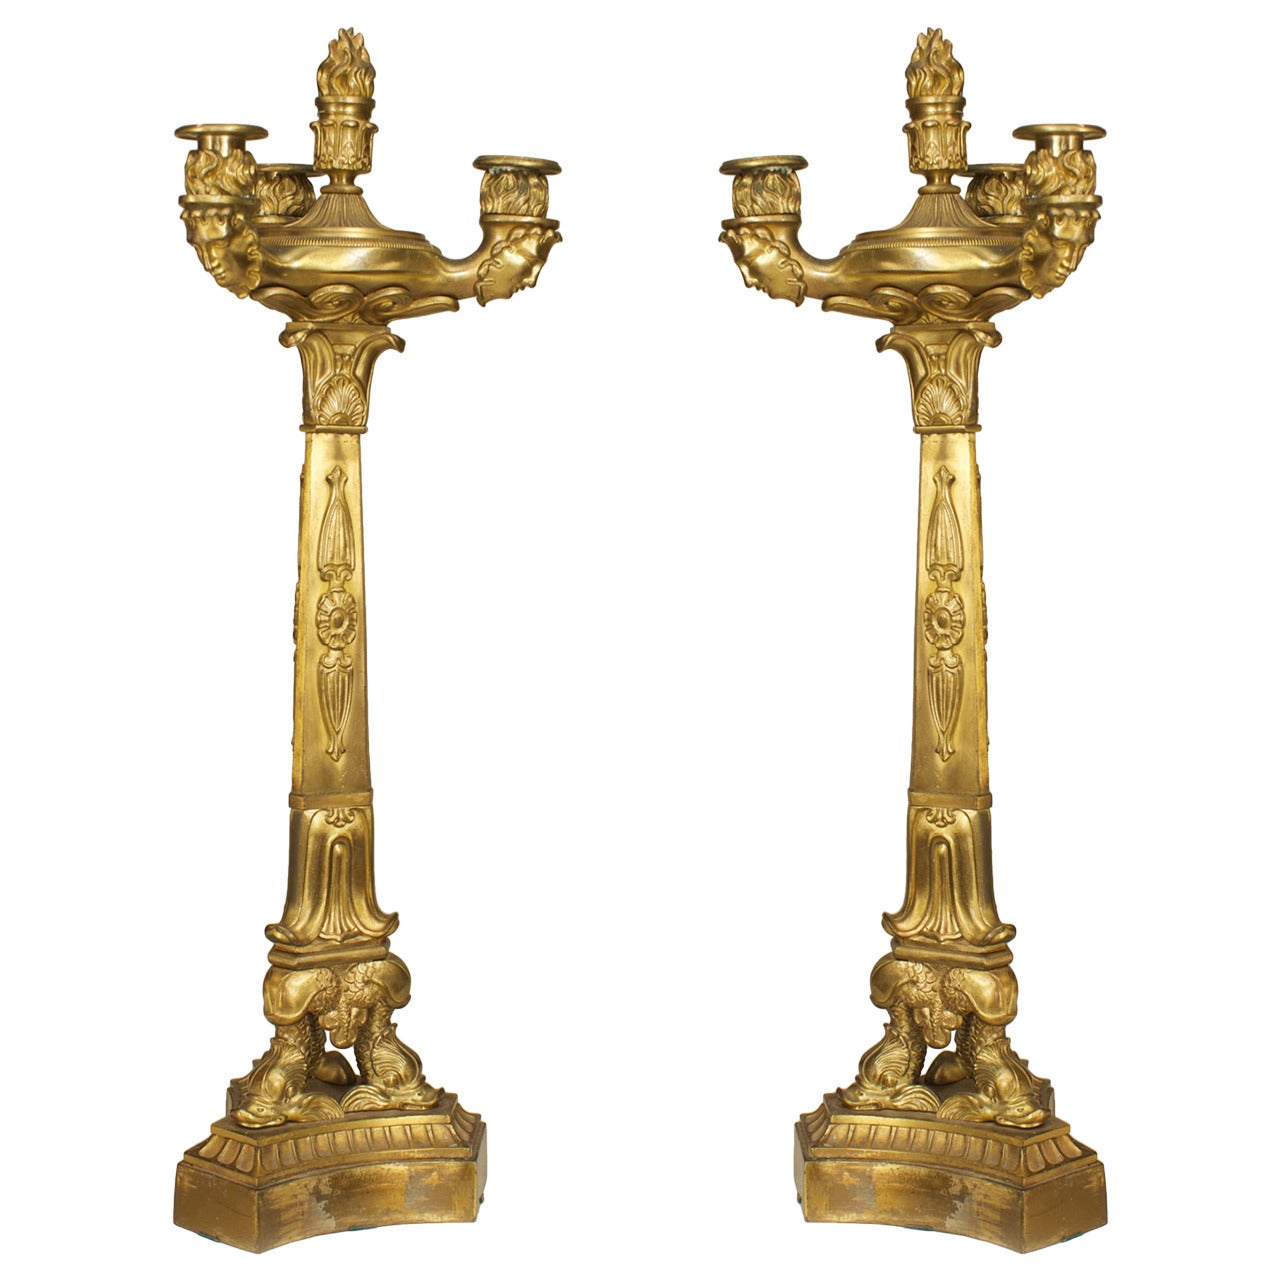 A Fine Pair of French Restoration Gilt Bronze Candelabras